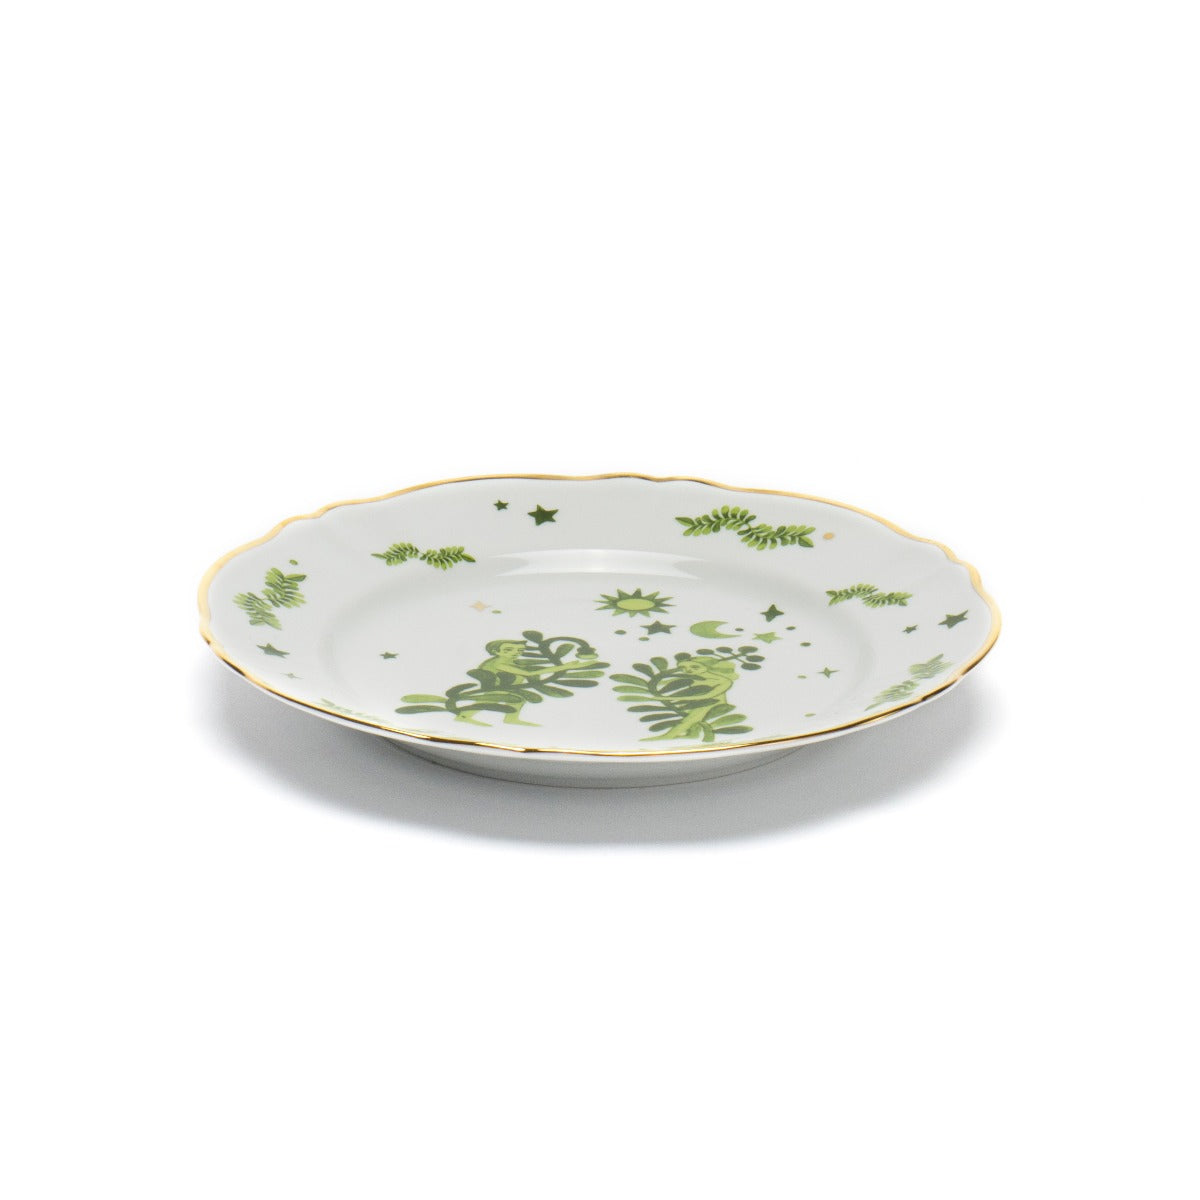 Green Floral Dinner Plate